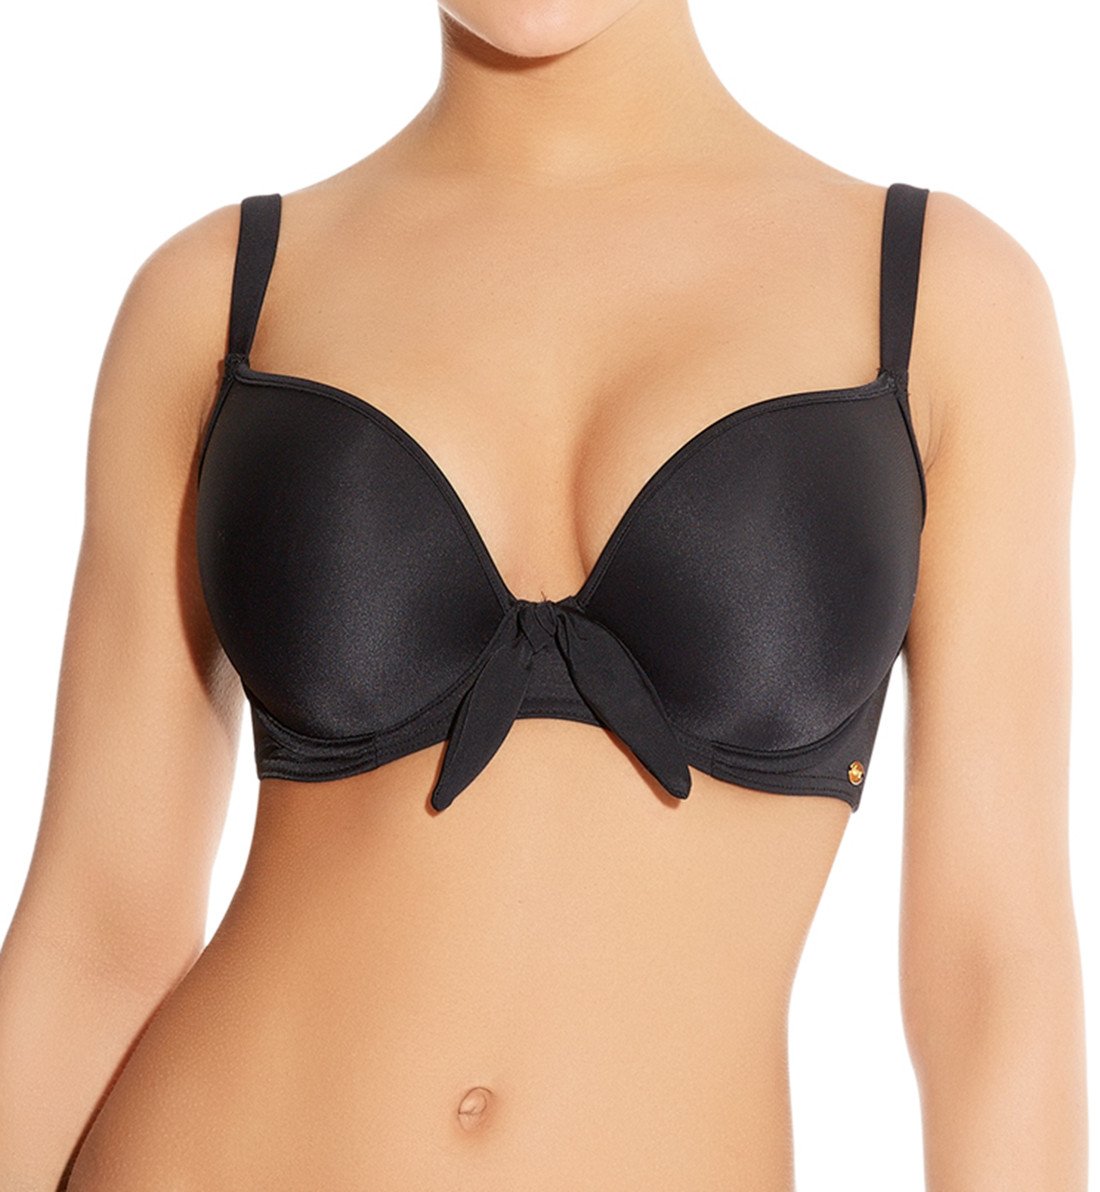 Freya Deco Molded Underwire Bikini Swim Top (3284),28D,Black - Black,28D